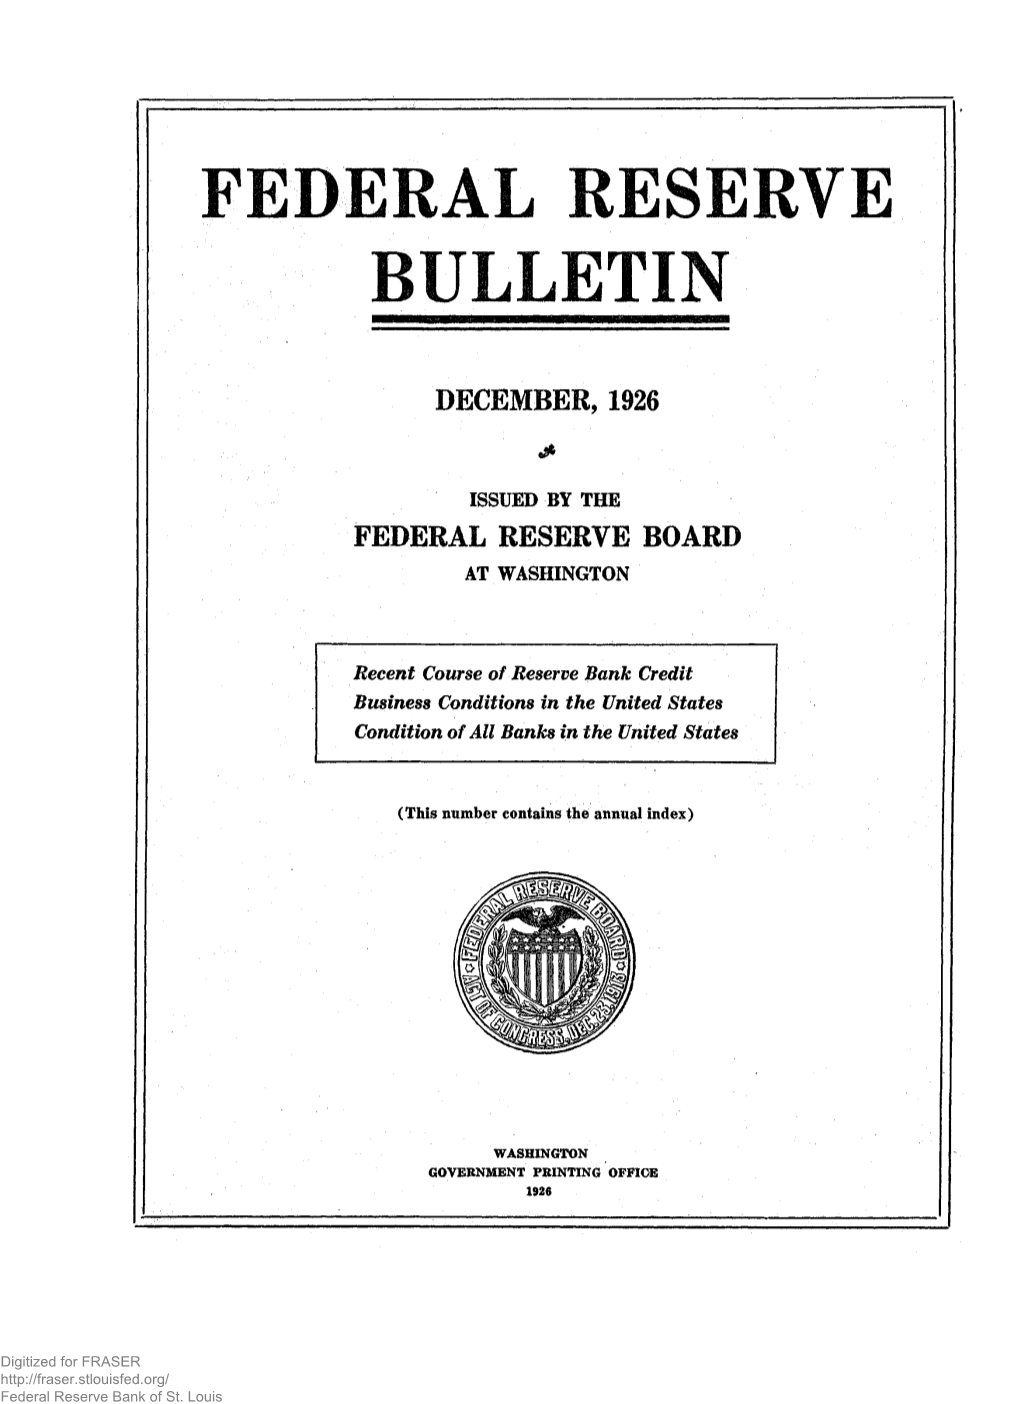 Federal Reserve Bulletin December 1926